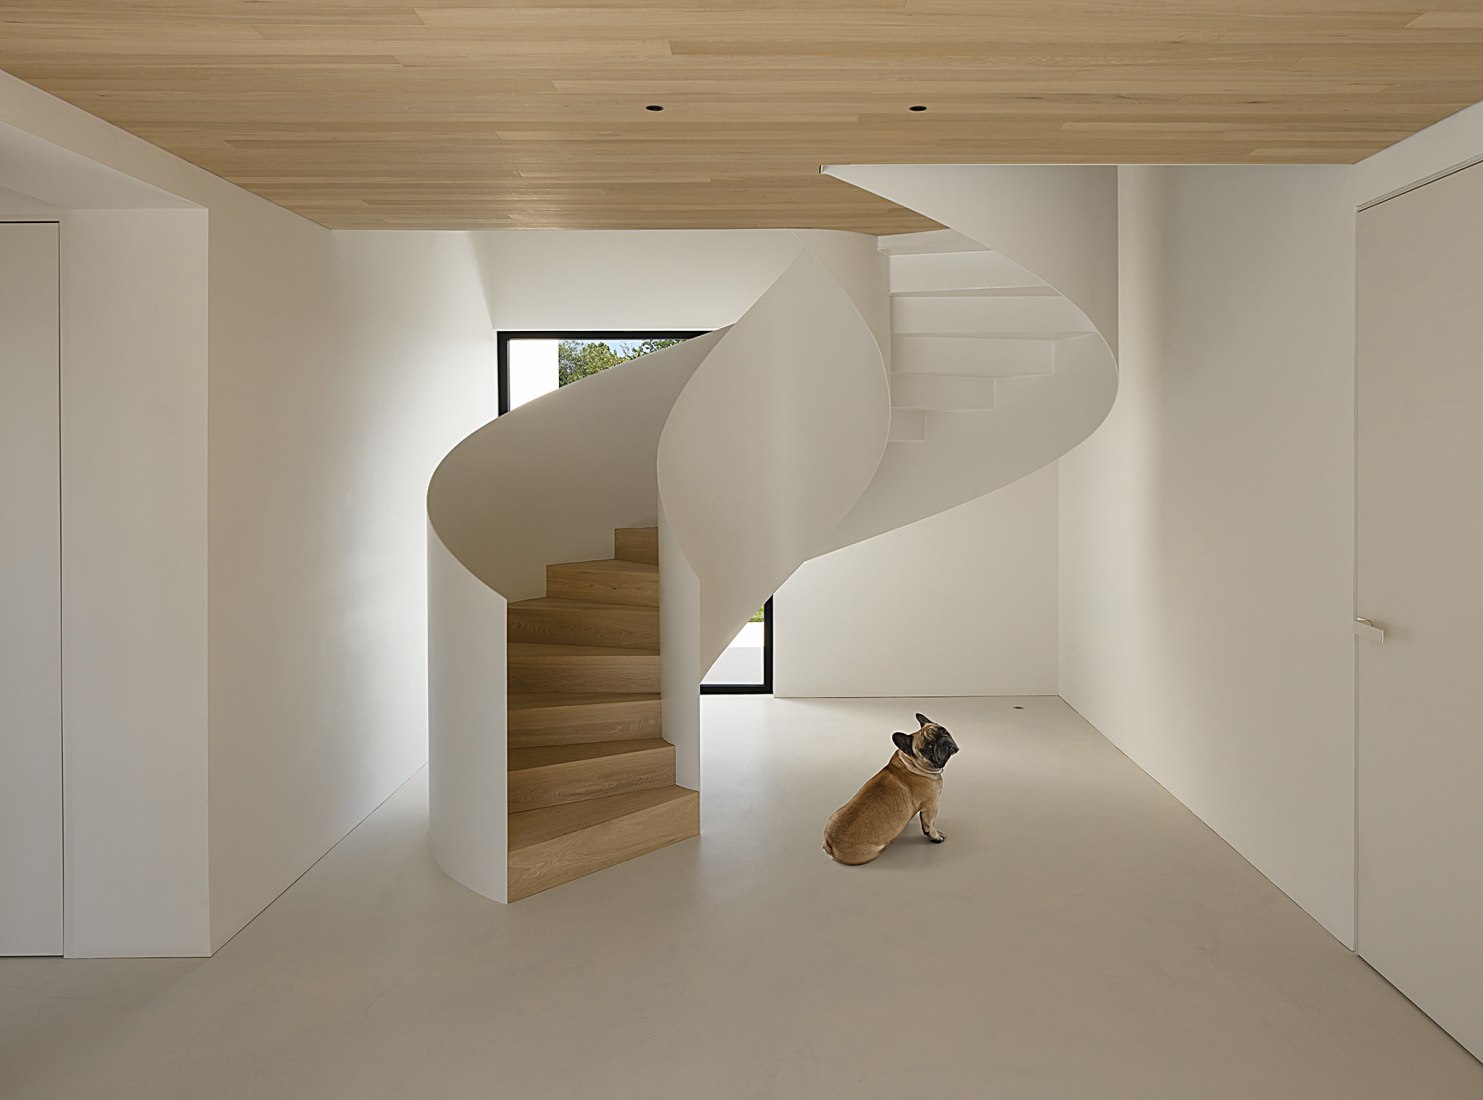 Gesep House by Jaime Prous Architects. Photograph by Alejo Bagué.